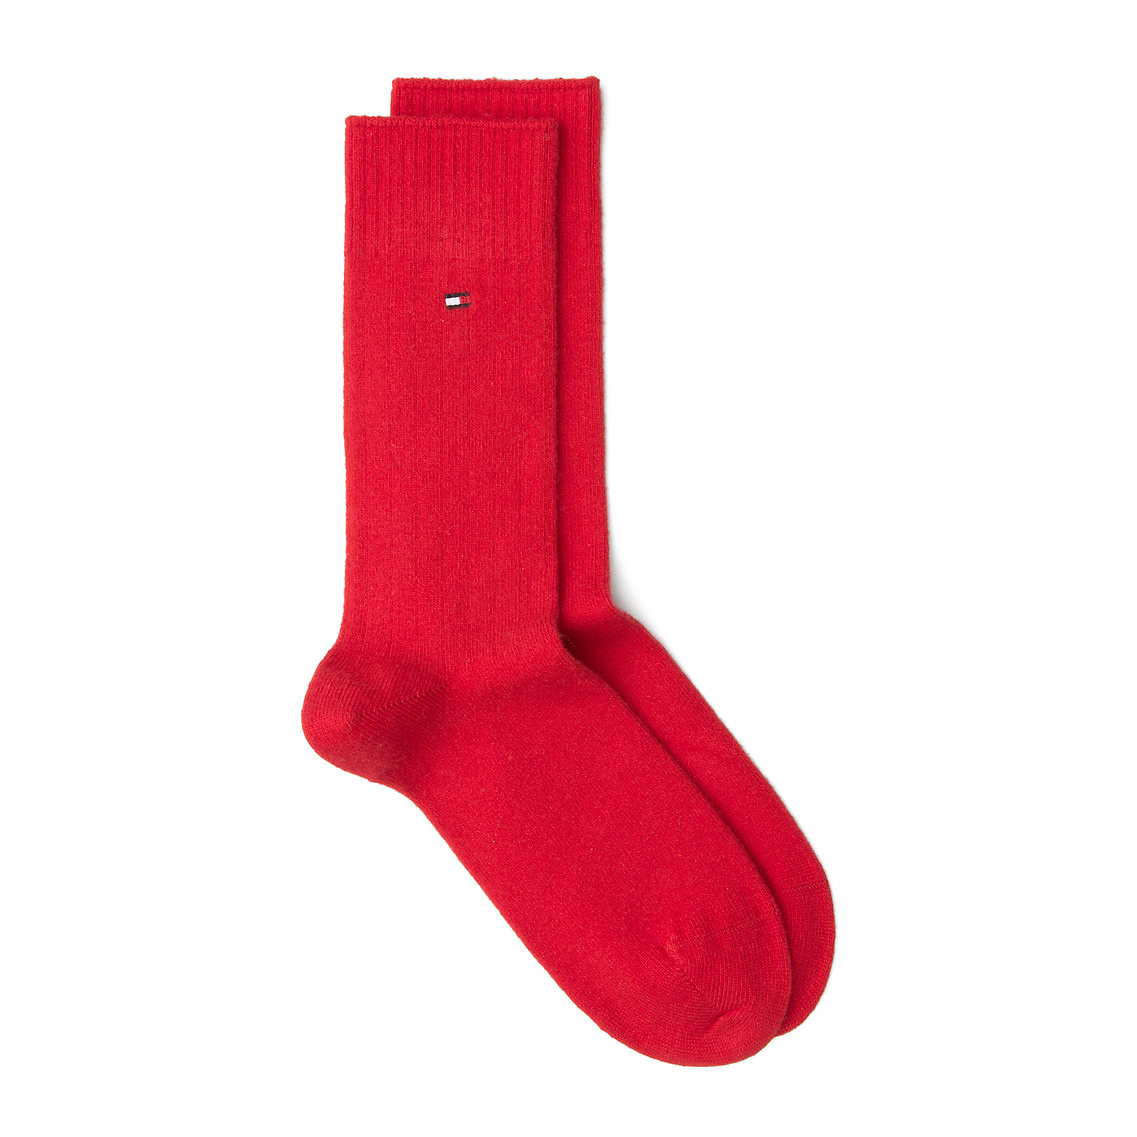 Tommy Hilfiger Socks in Red for Men - Lyst